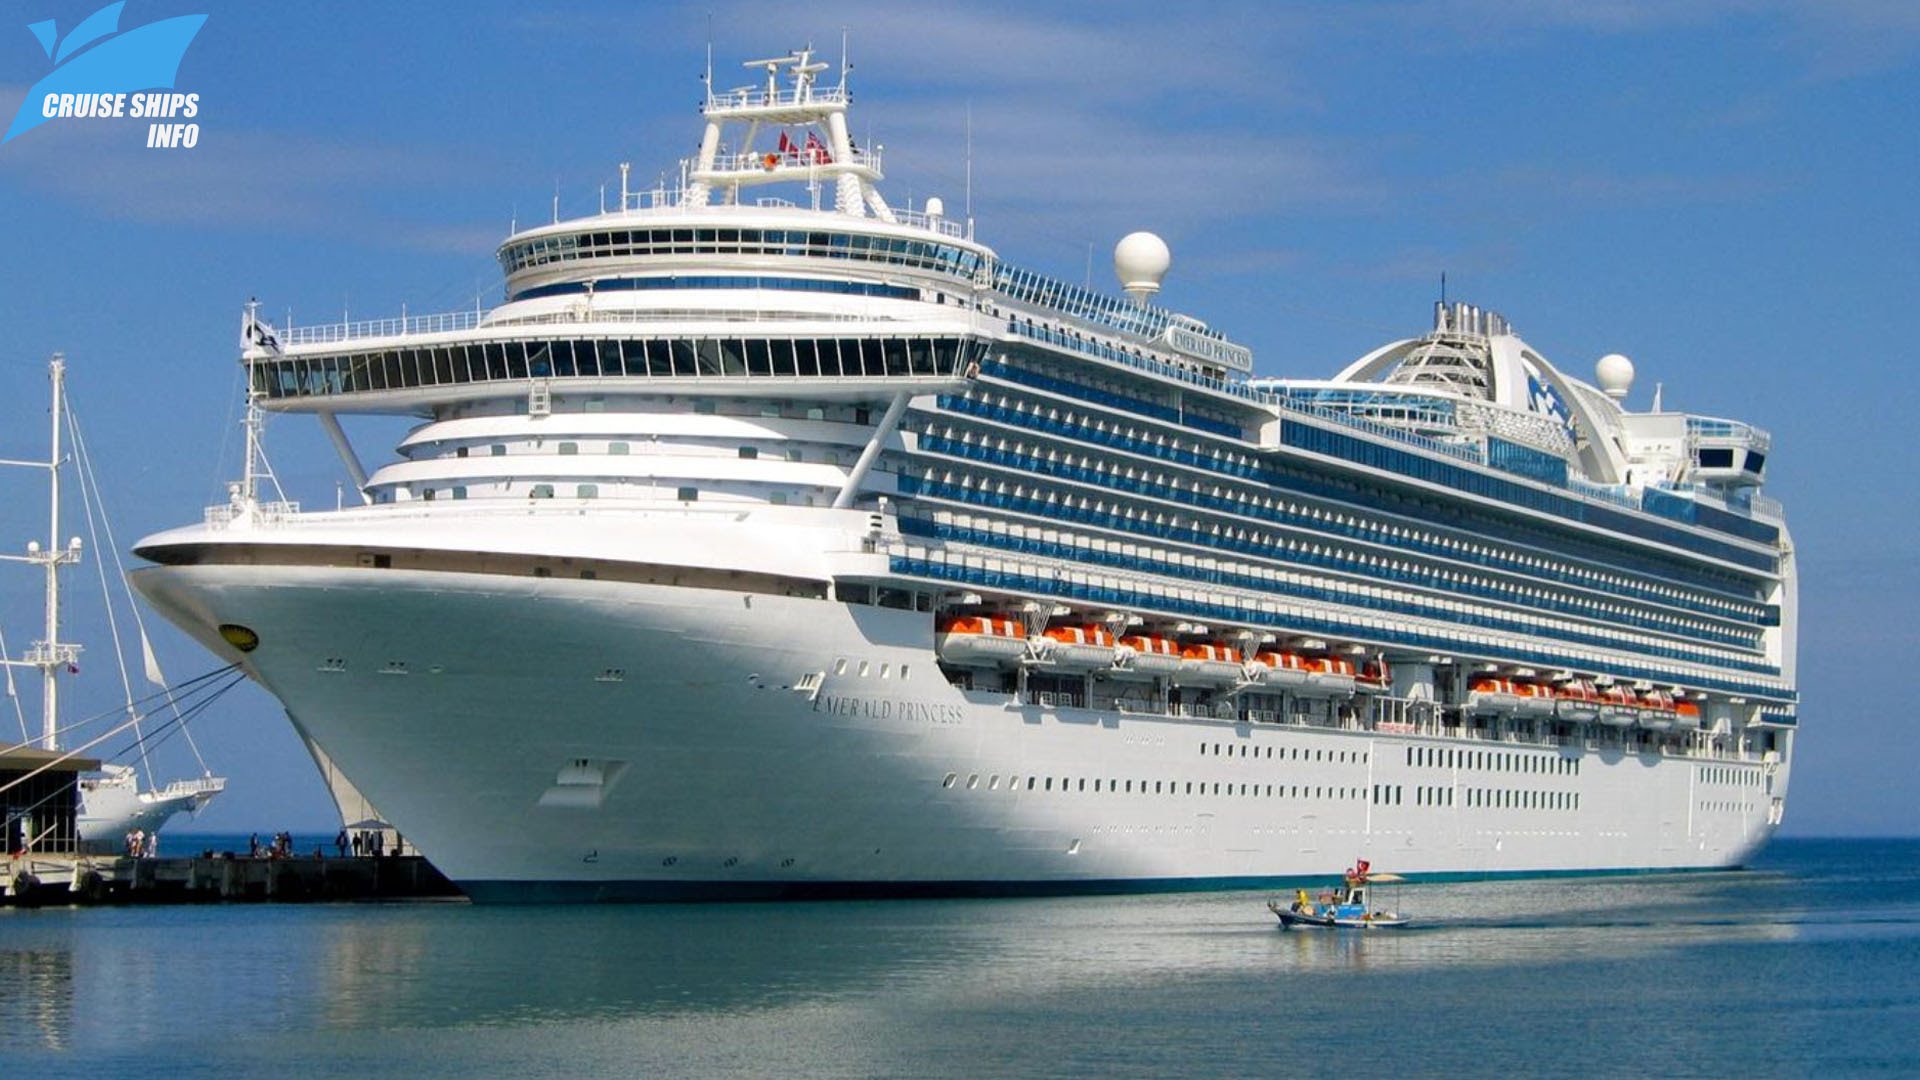 Emerald Princess Cruise Ship Tour - Princess Cruise Line - YouTube